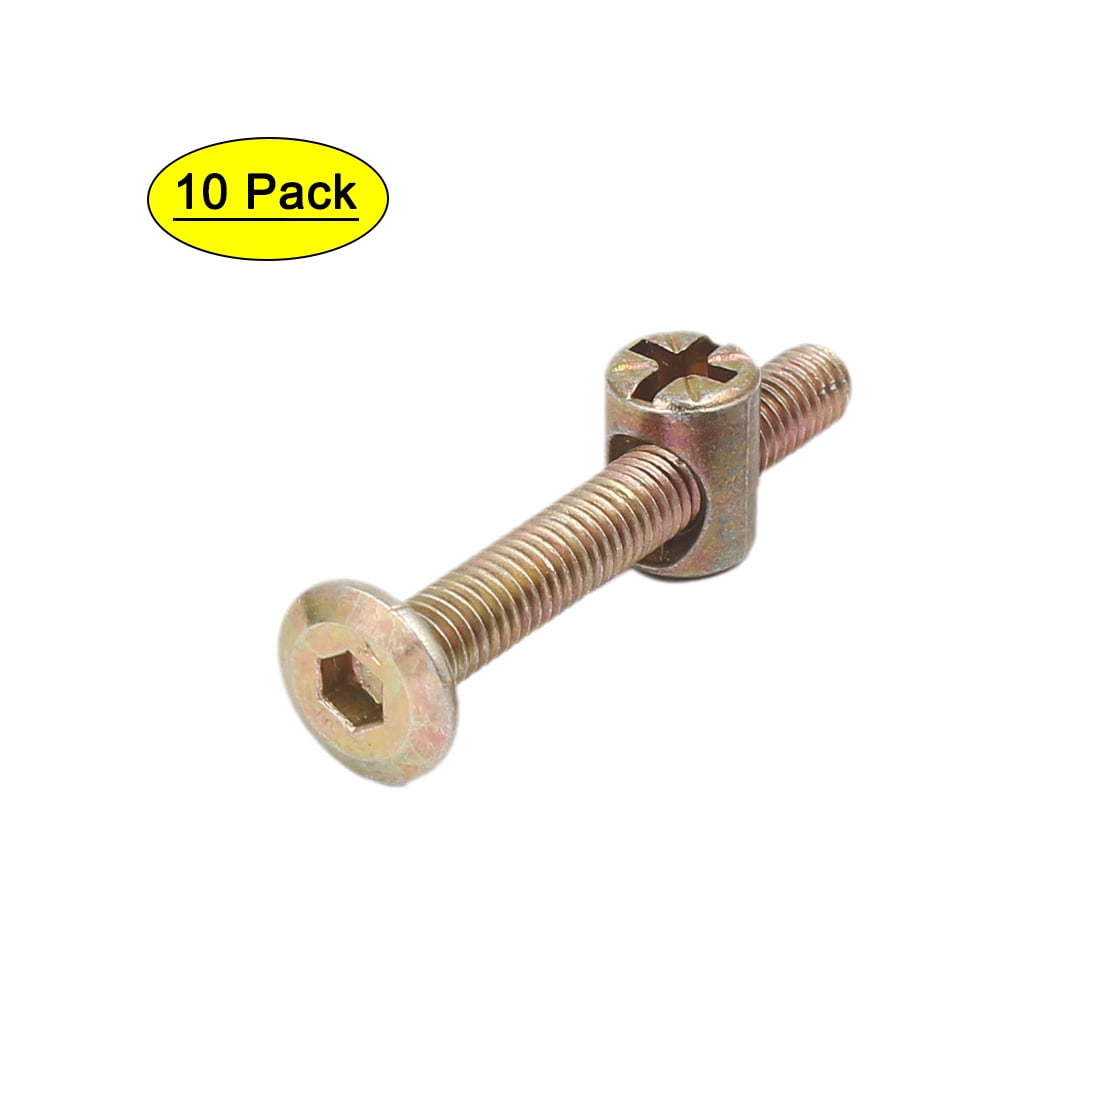 2pcs M6 conversion screw change bolt reducing screws slotted reversal bolts 304 